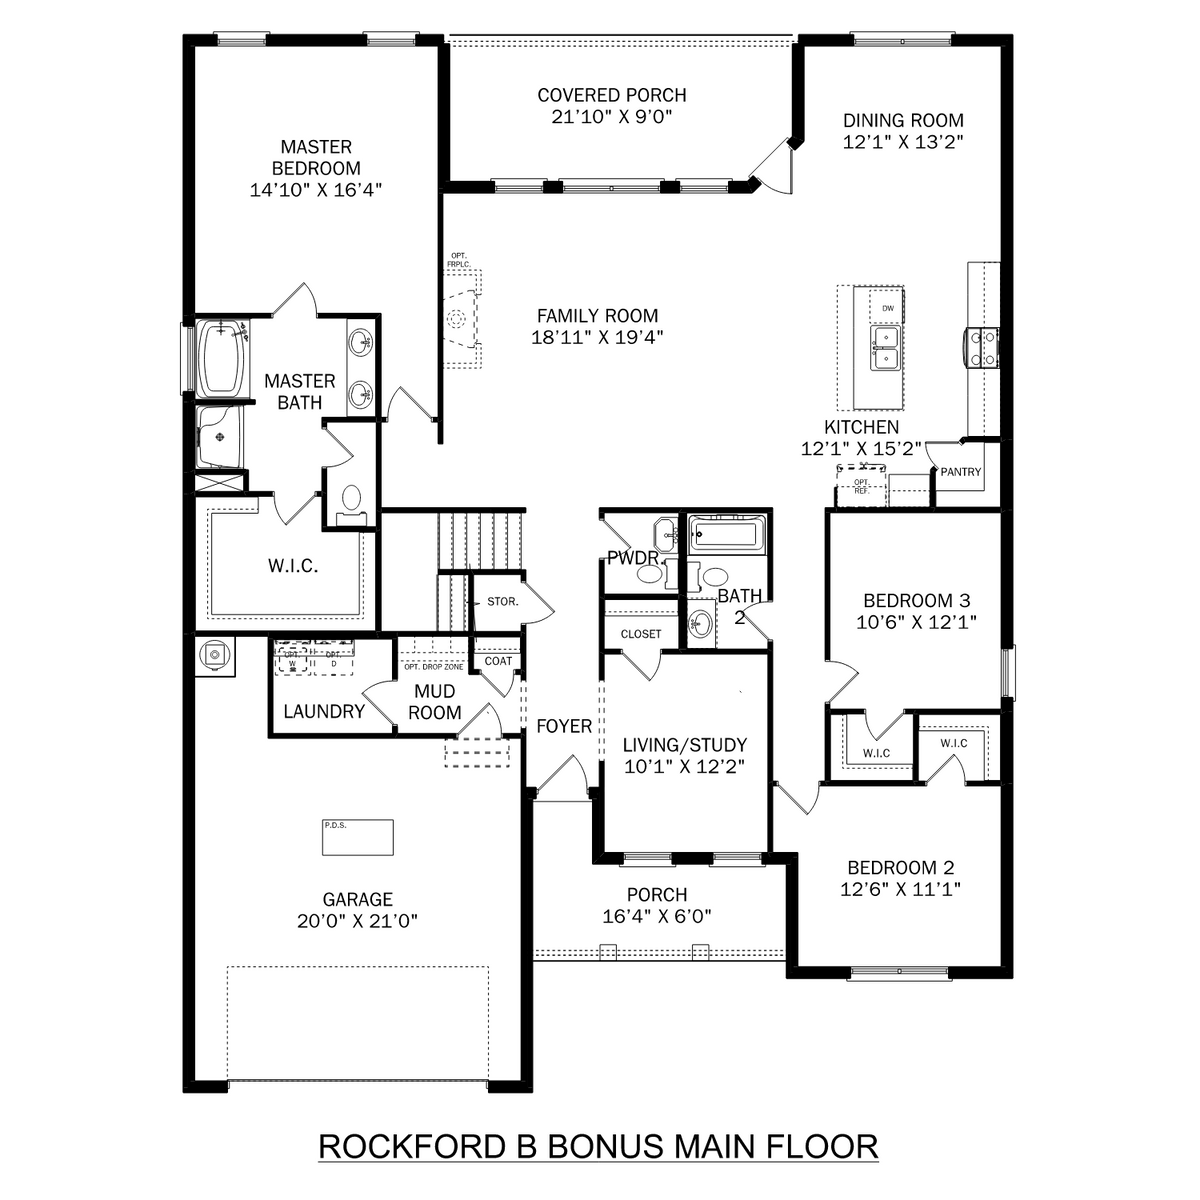 1 - The Rockford B with Bonus buildable floor plan layout in Davidson Homes' Barnett's Crossing community.